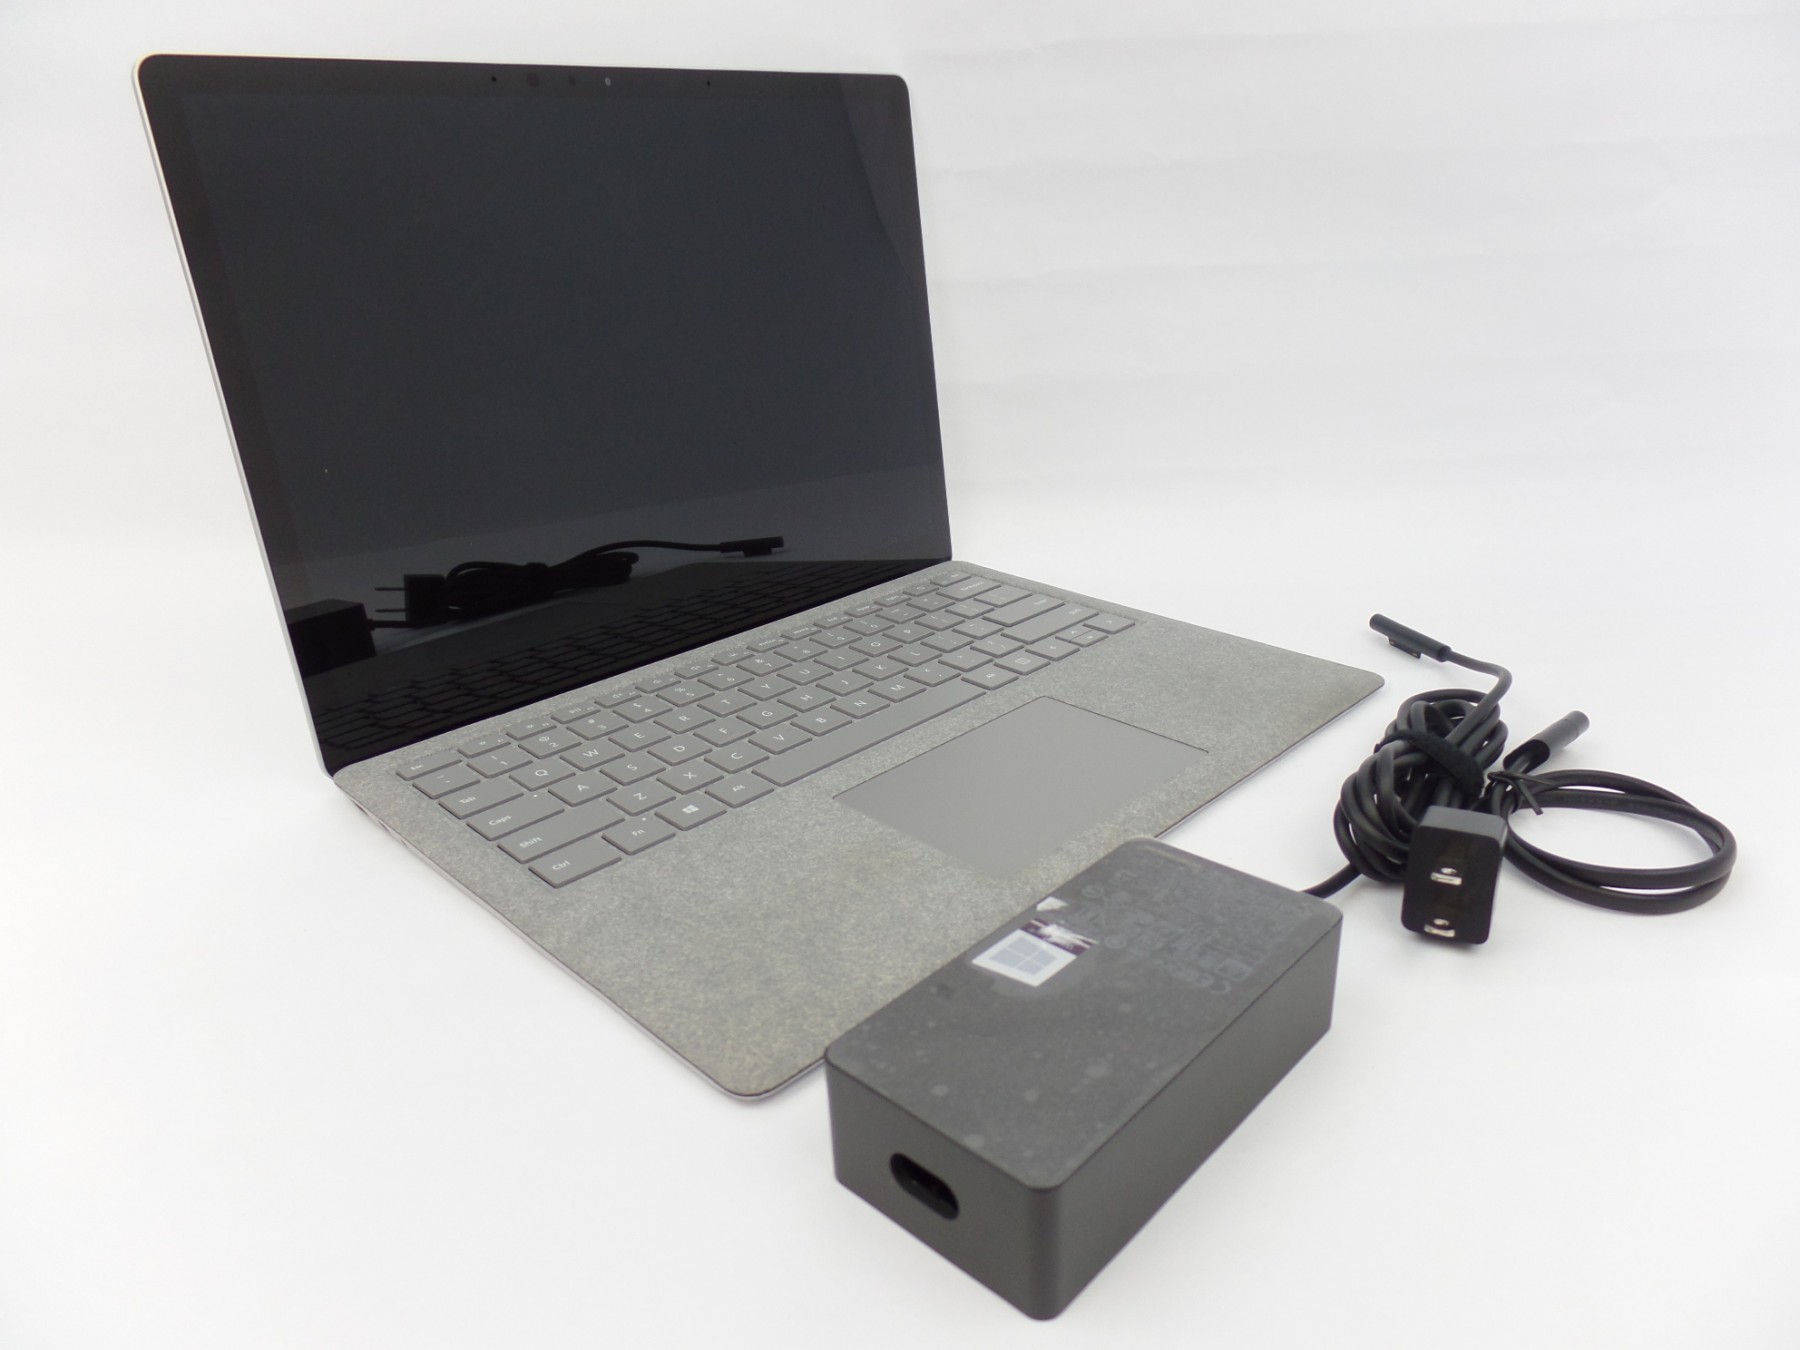 Microsoft Surface Laptop 1769 13.5" Touch i7-7660U 2.5Hz 8GB 256GB Iris